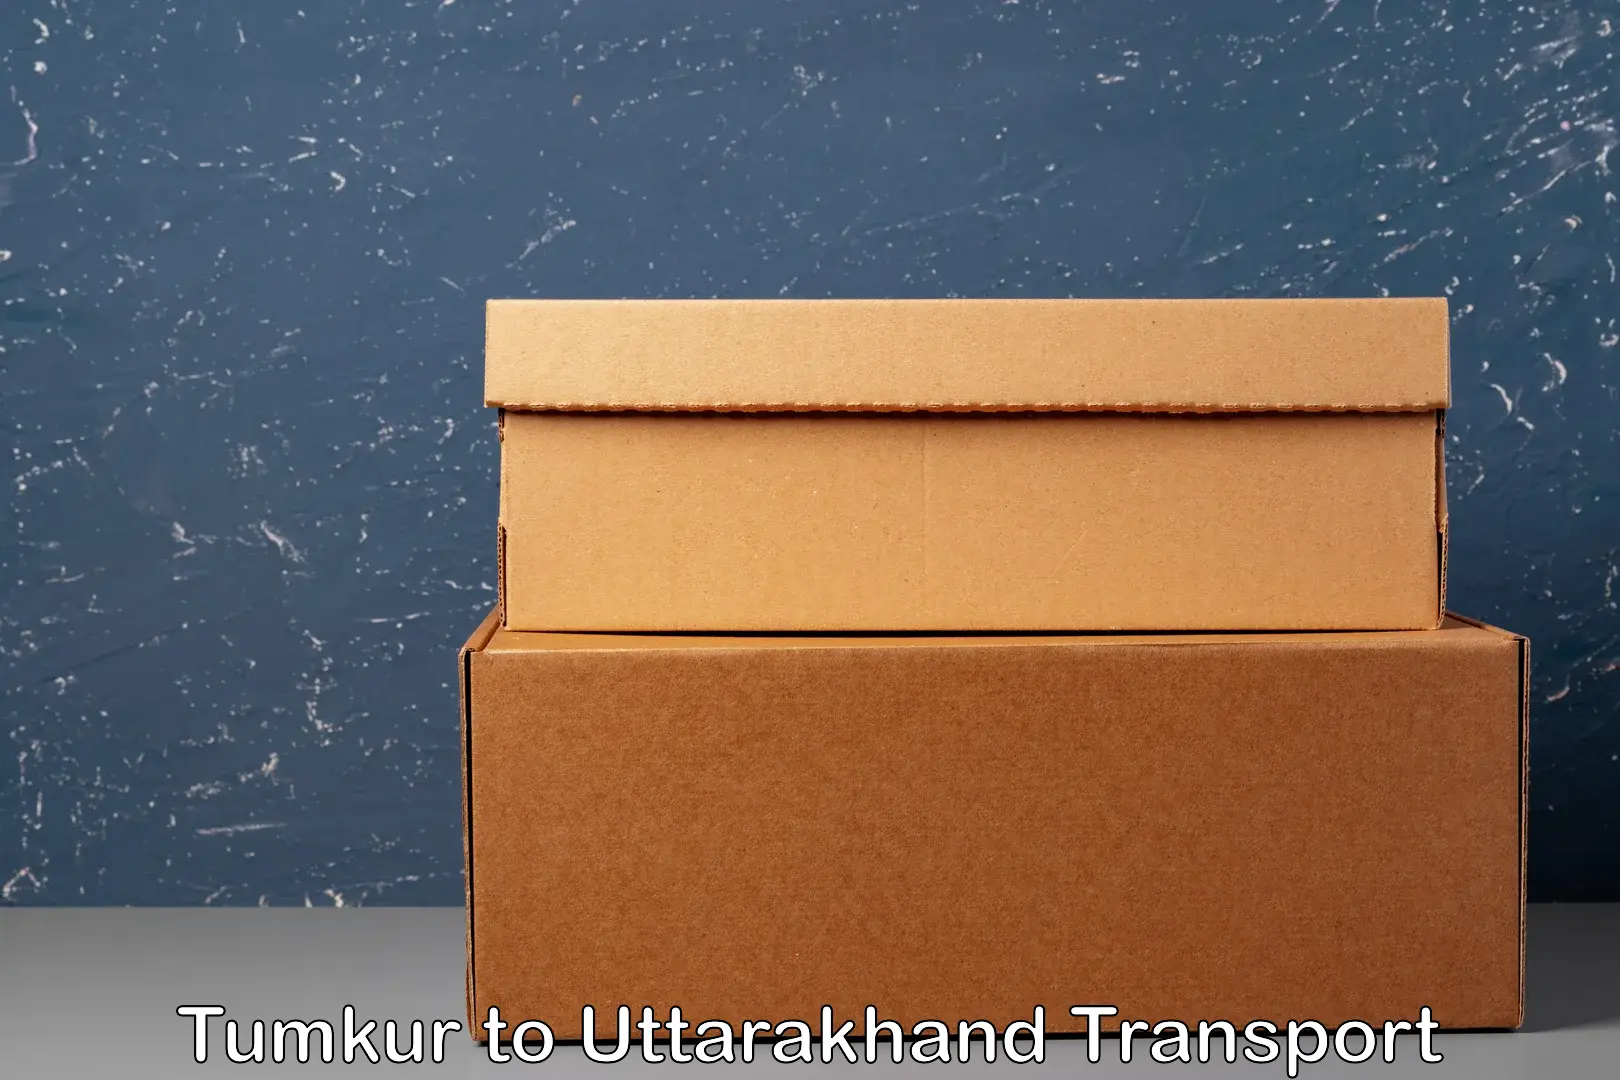 Truck transport companies in India Tumkur to Uttarakhand